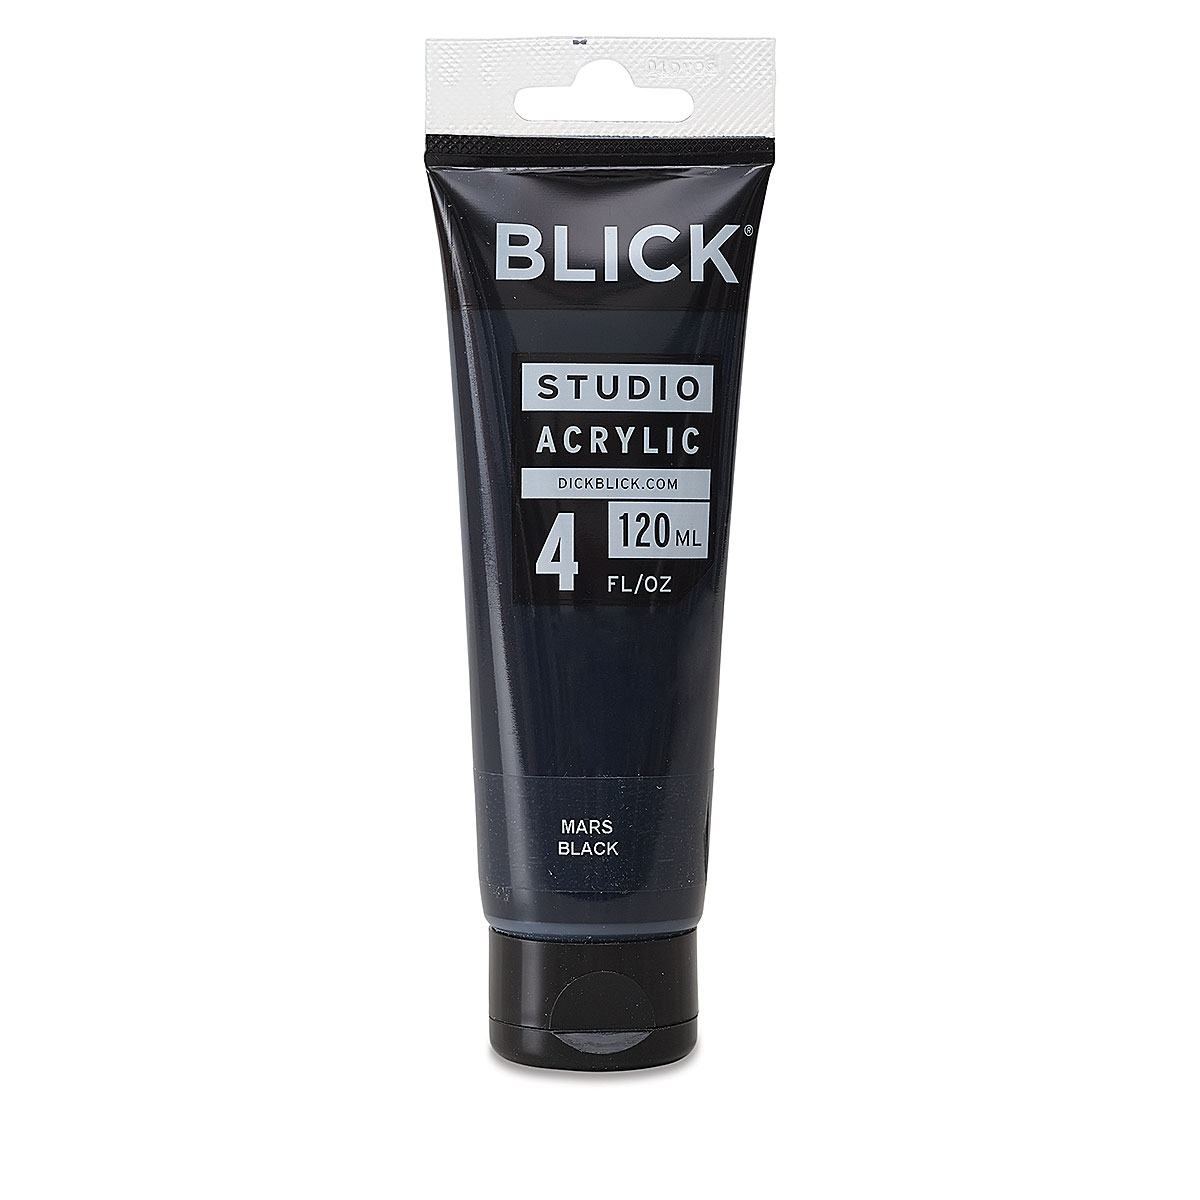 Blick Studio Acrylics - Mars Black, 4 oz tube